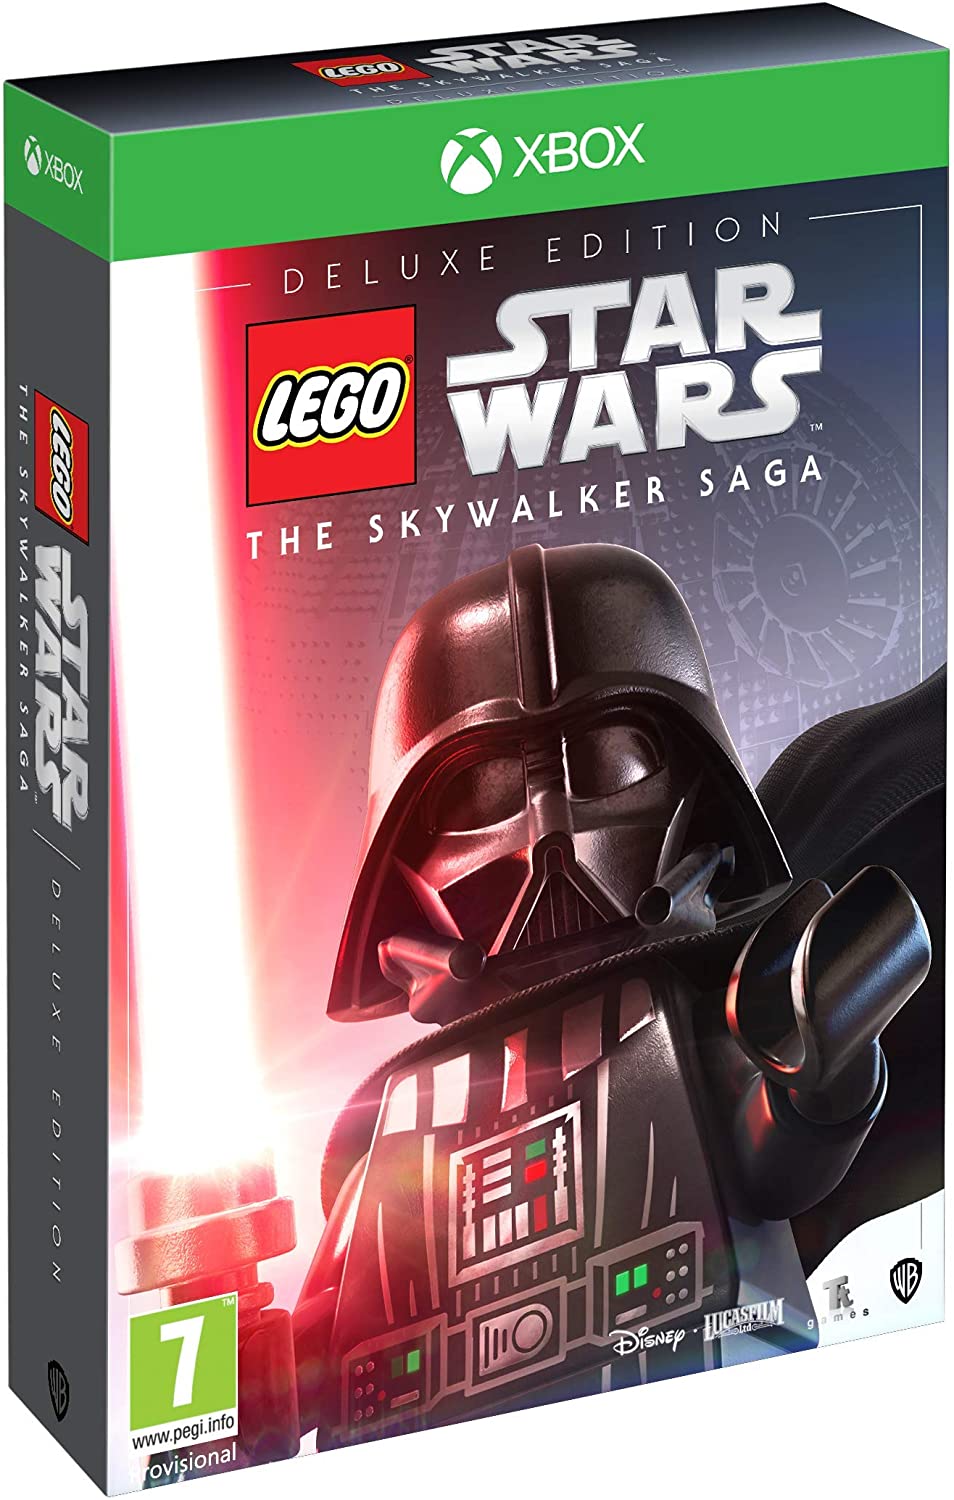 LEGO Star Wars: The Skywalker Saga - Deluxe Edition (Xbox One), Warner Bros